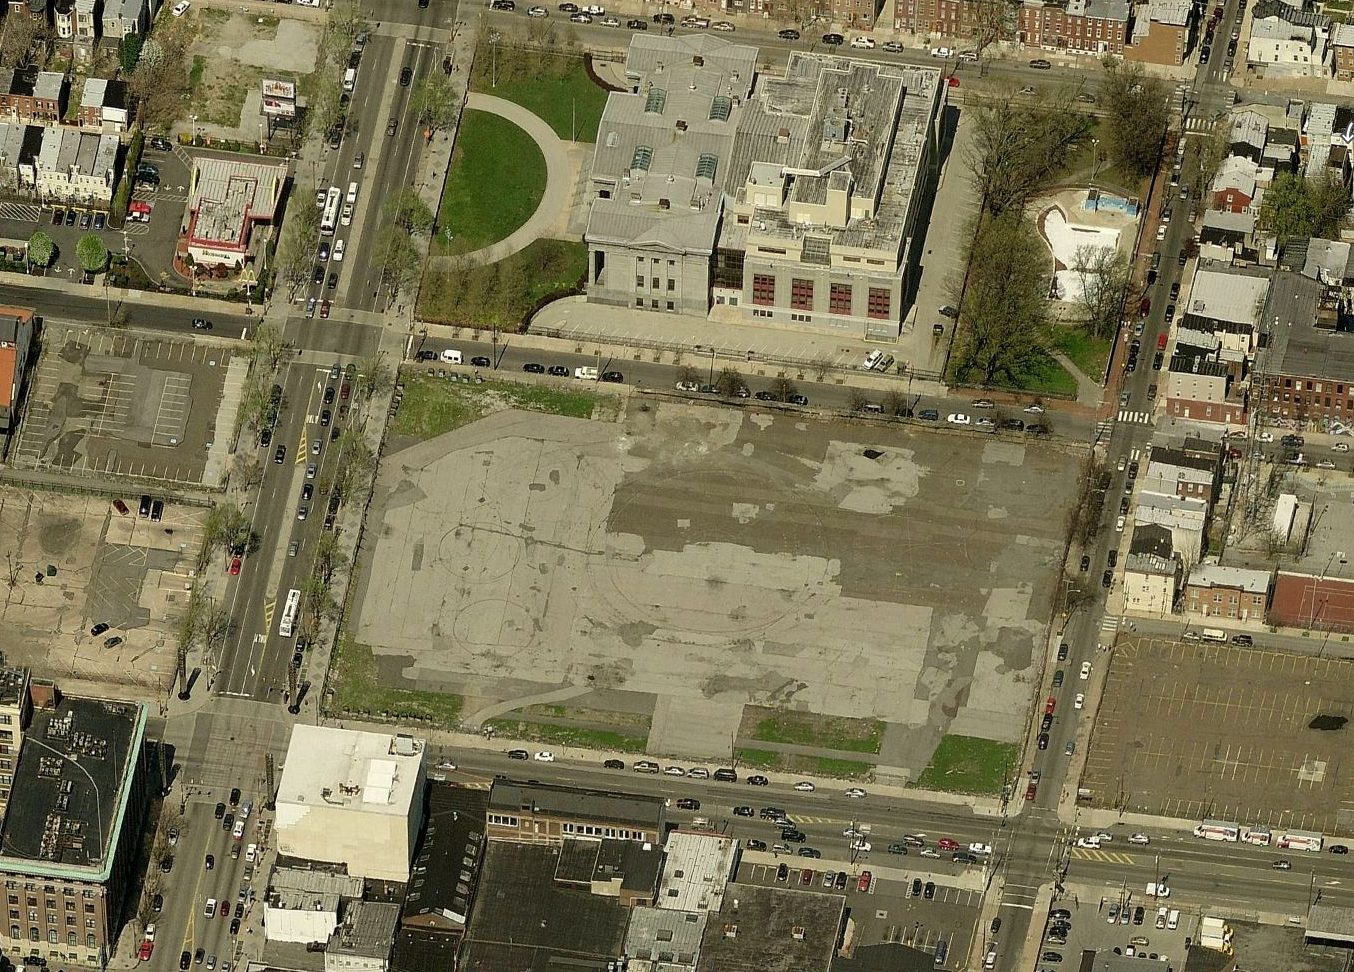 Development site at Broad and Washington | Bing Maps